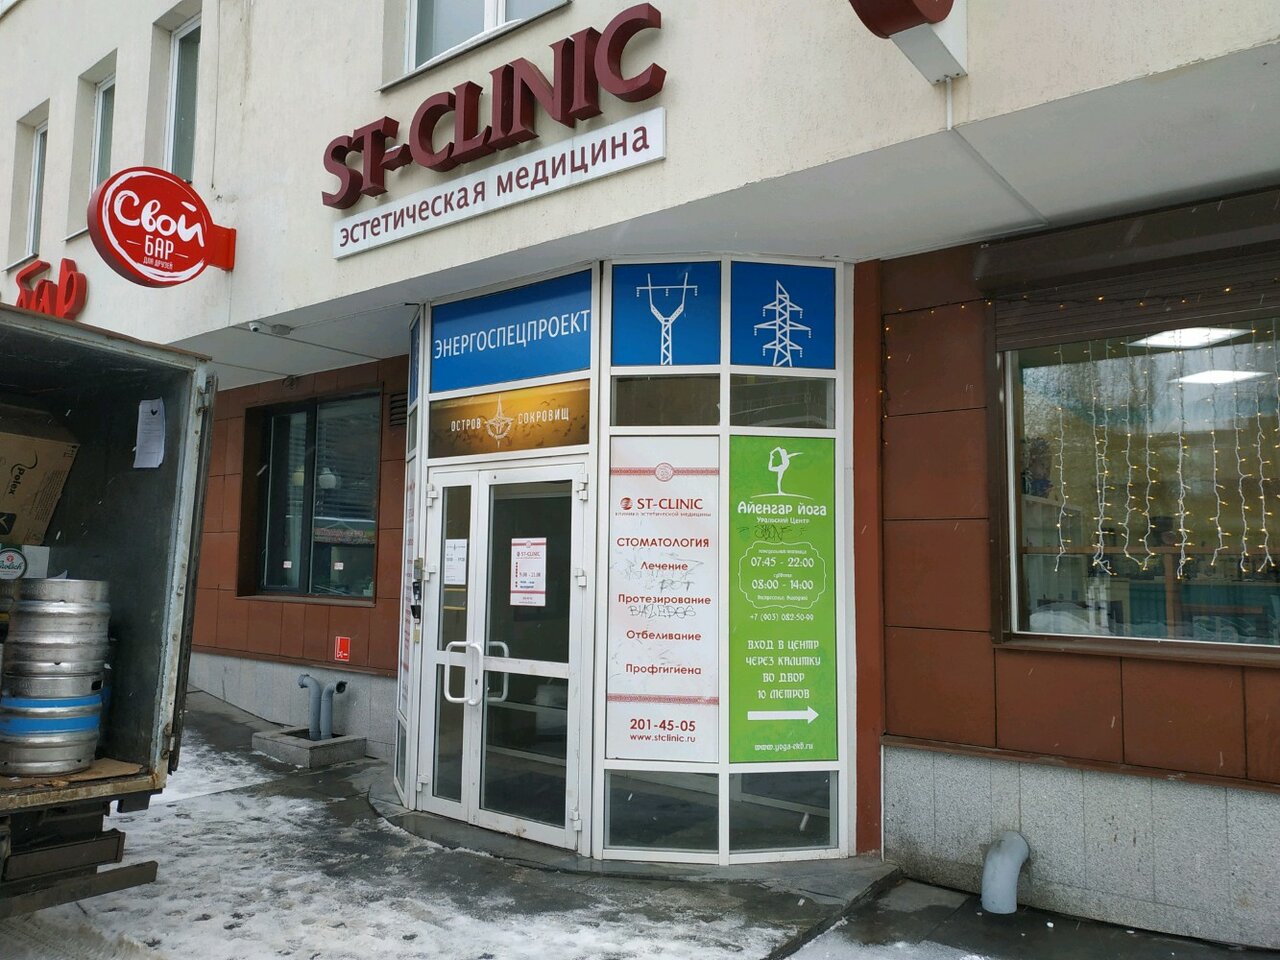 St-clinic - Найдите проверенную стоматологию Yull.ru